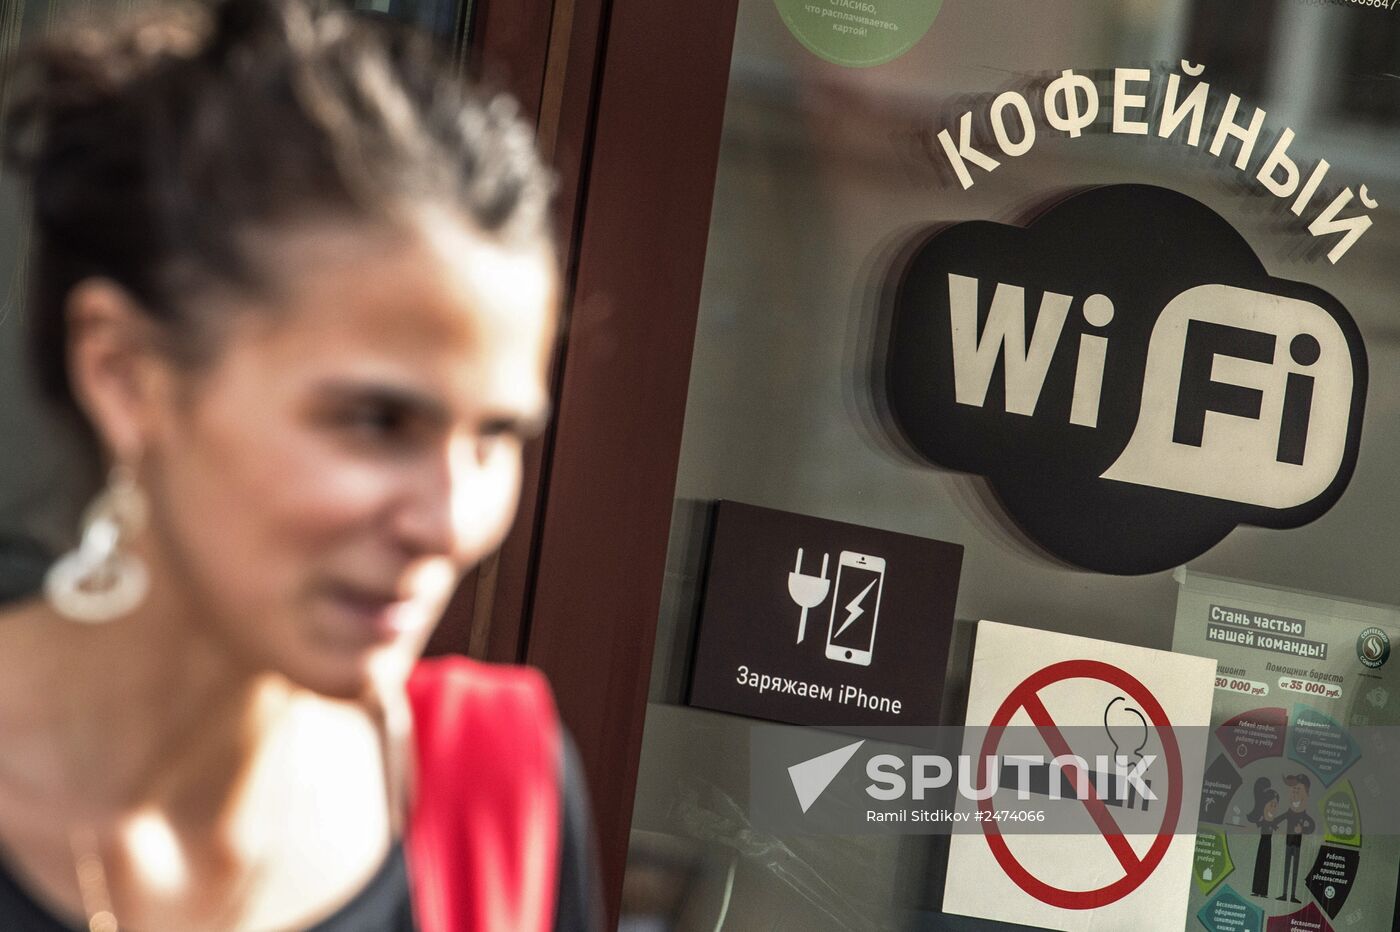 Wi-Fi access in public places